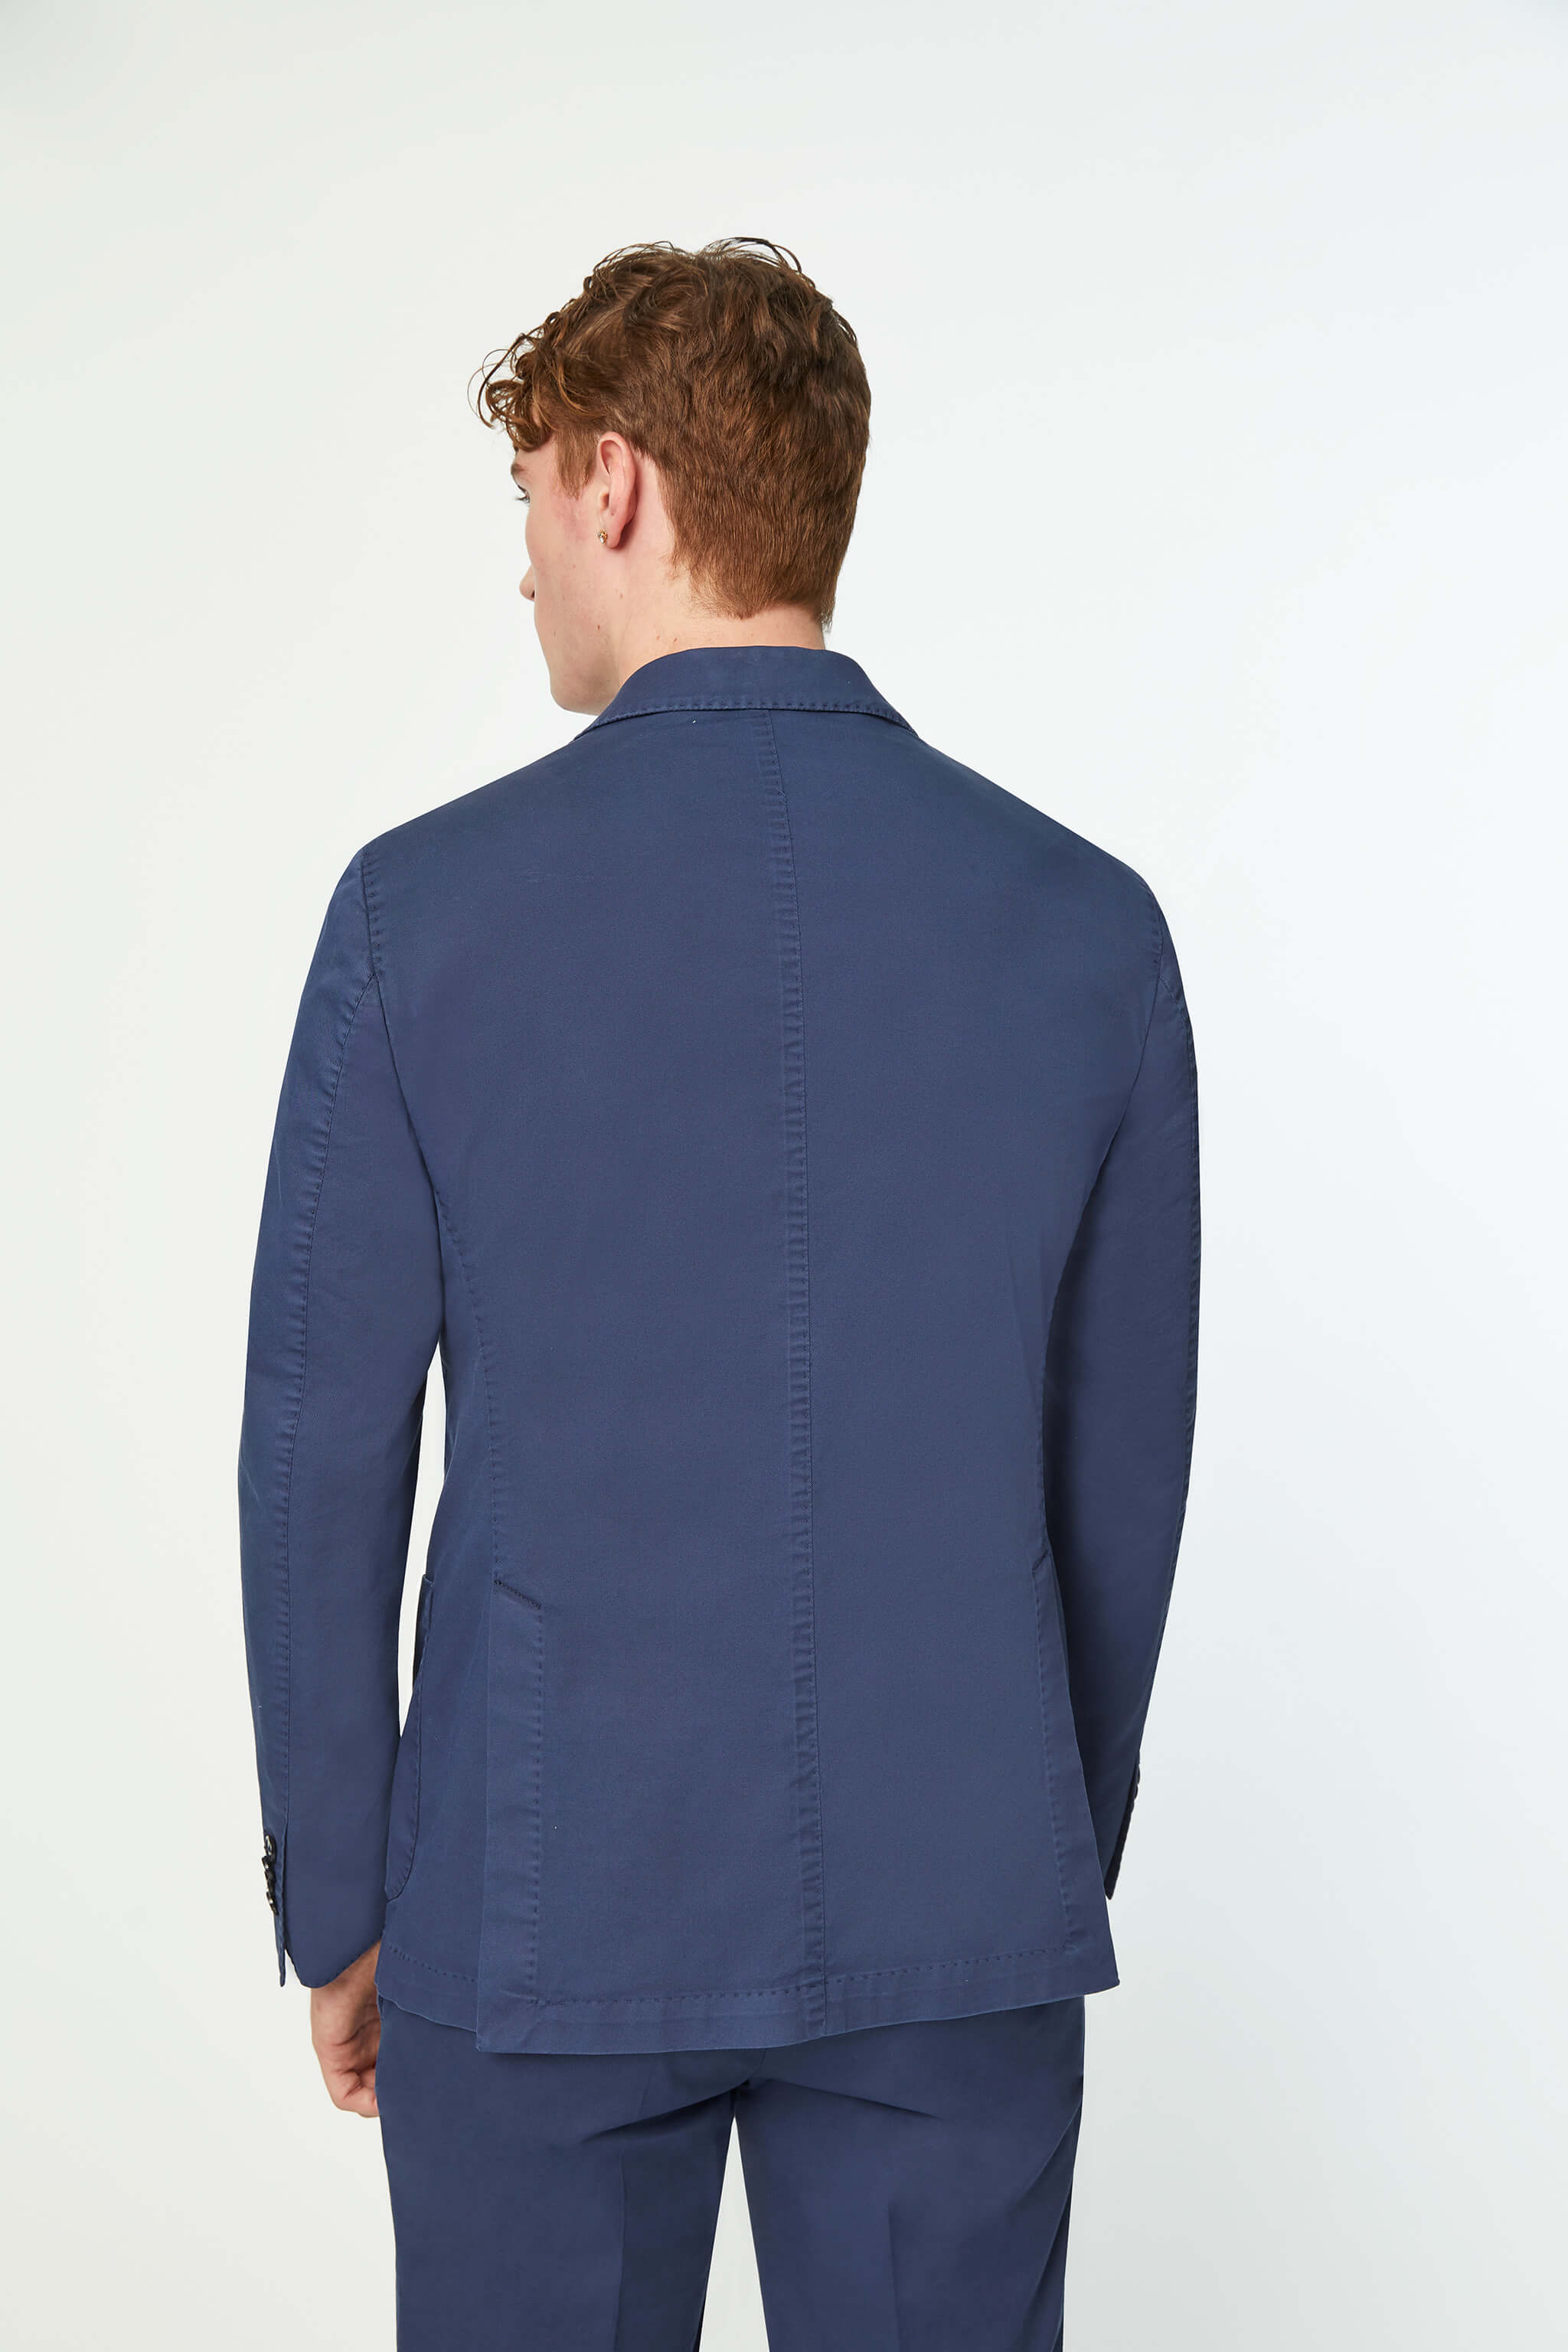 Garment-dyed JACK denim suit in Blue